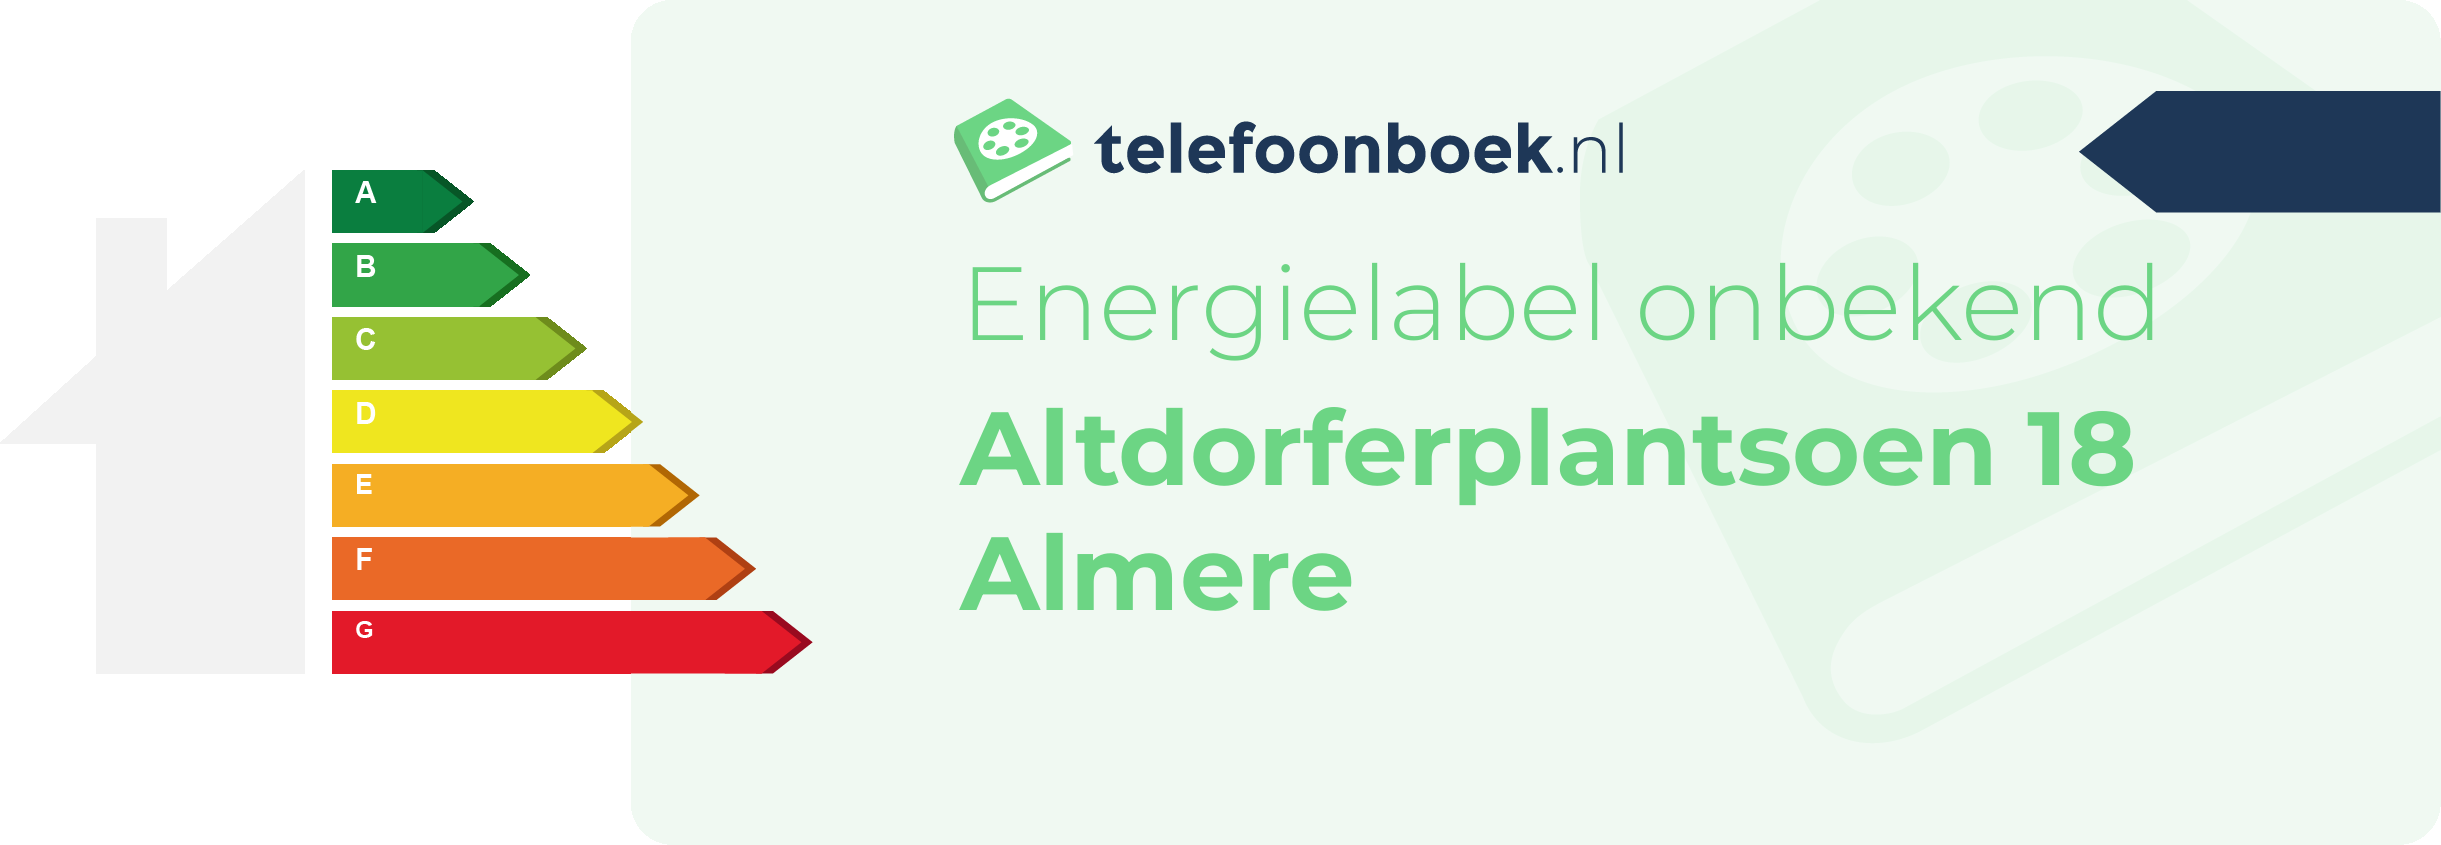 Energielabel Altdorferplantsoen 18 Almere